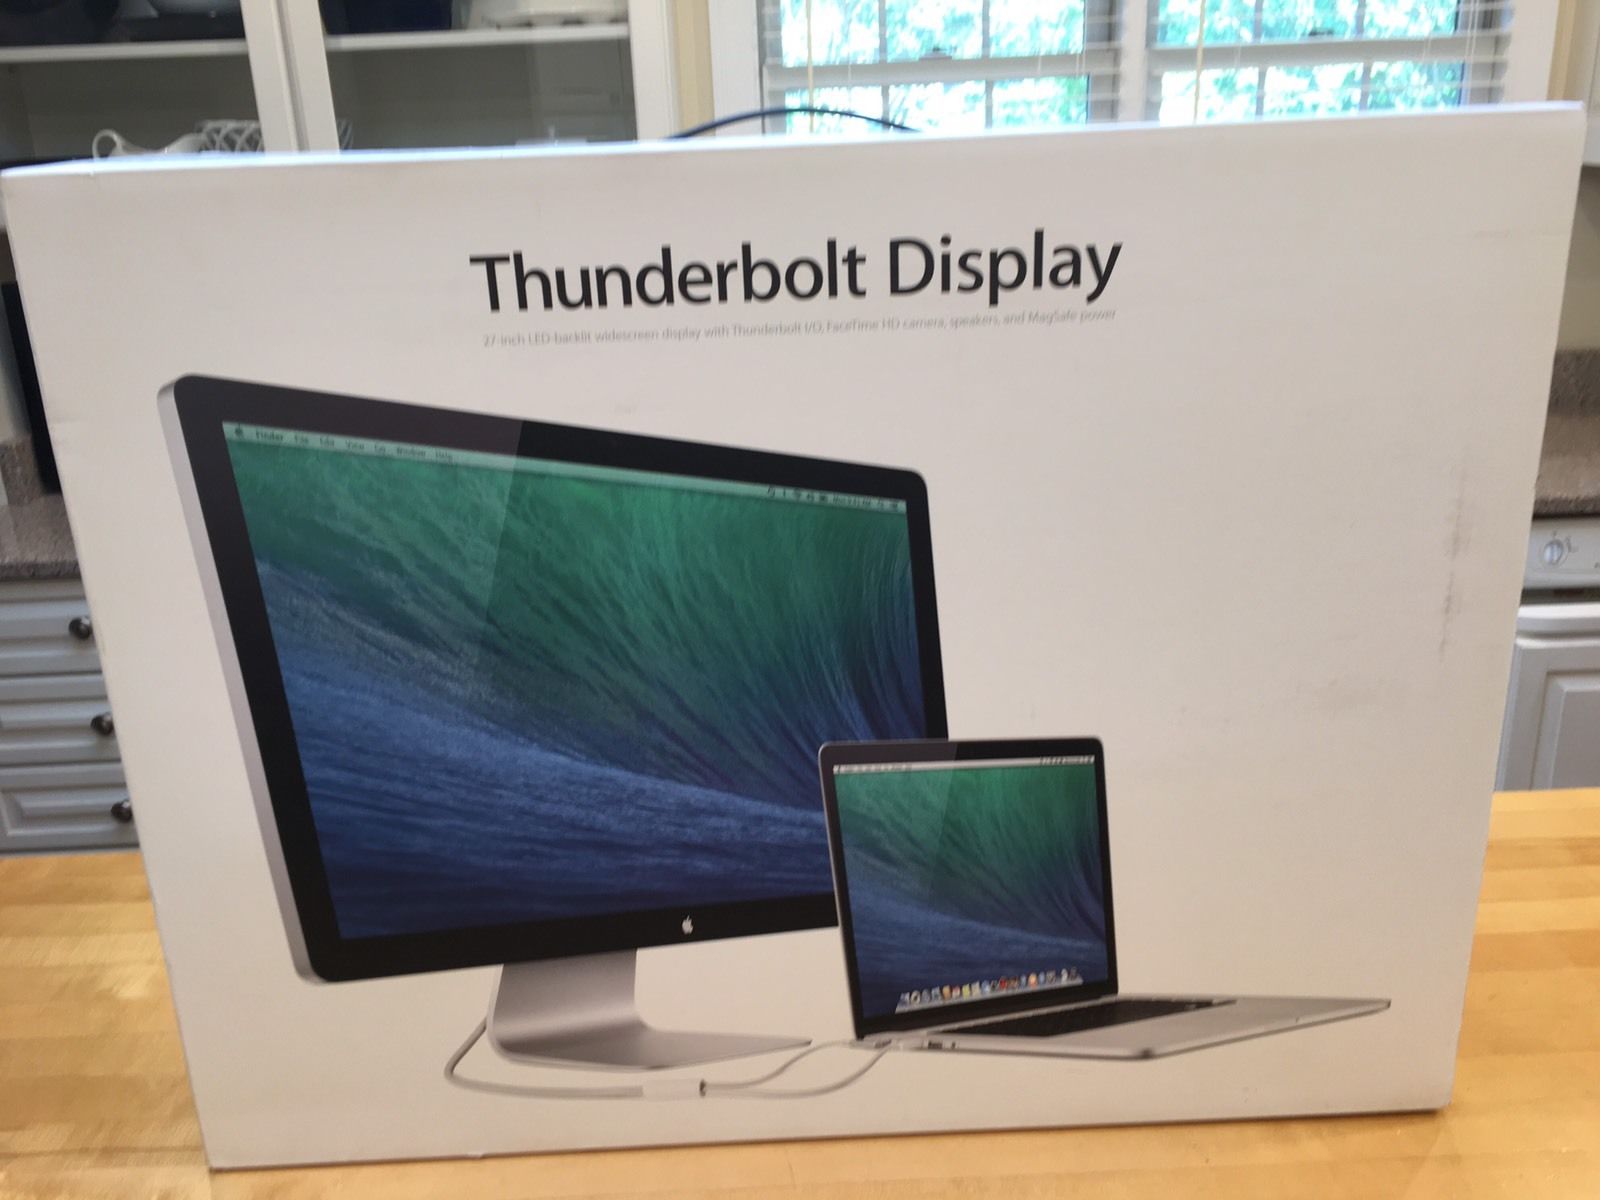 Apple Thunderbolt Display 27-inch 2560x1440 A1407